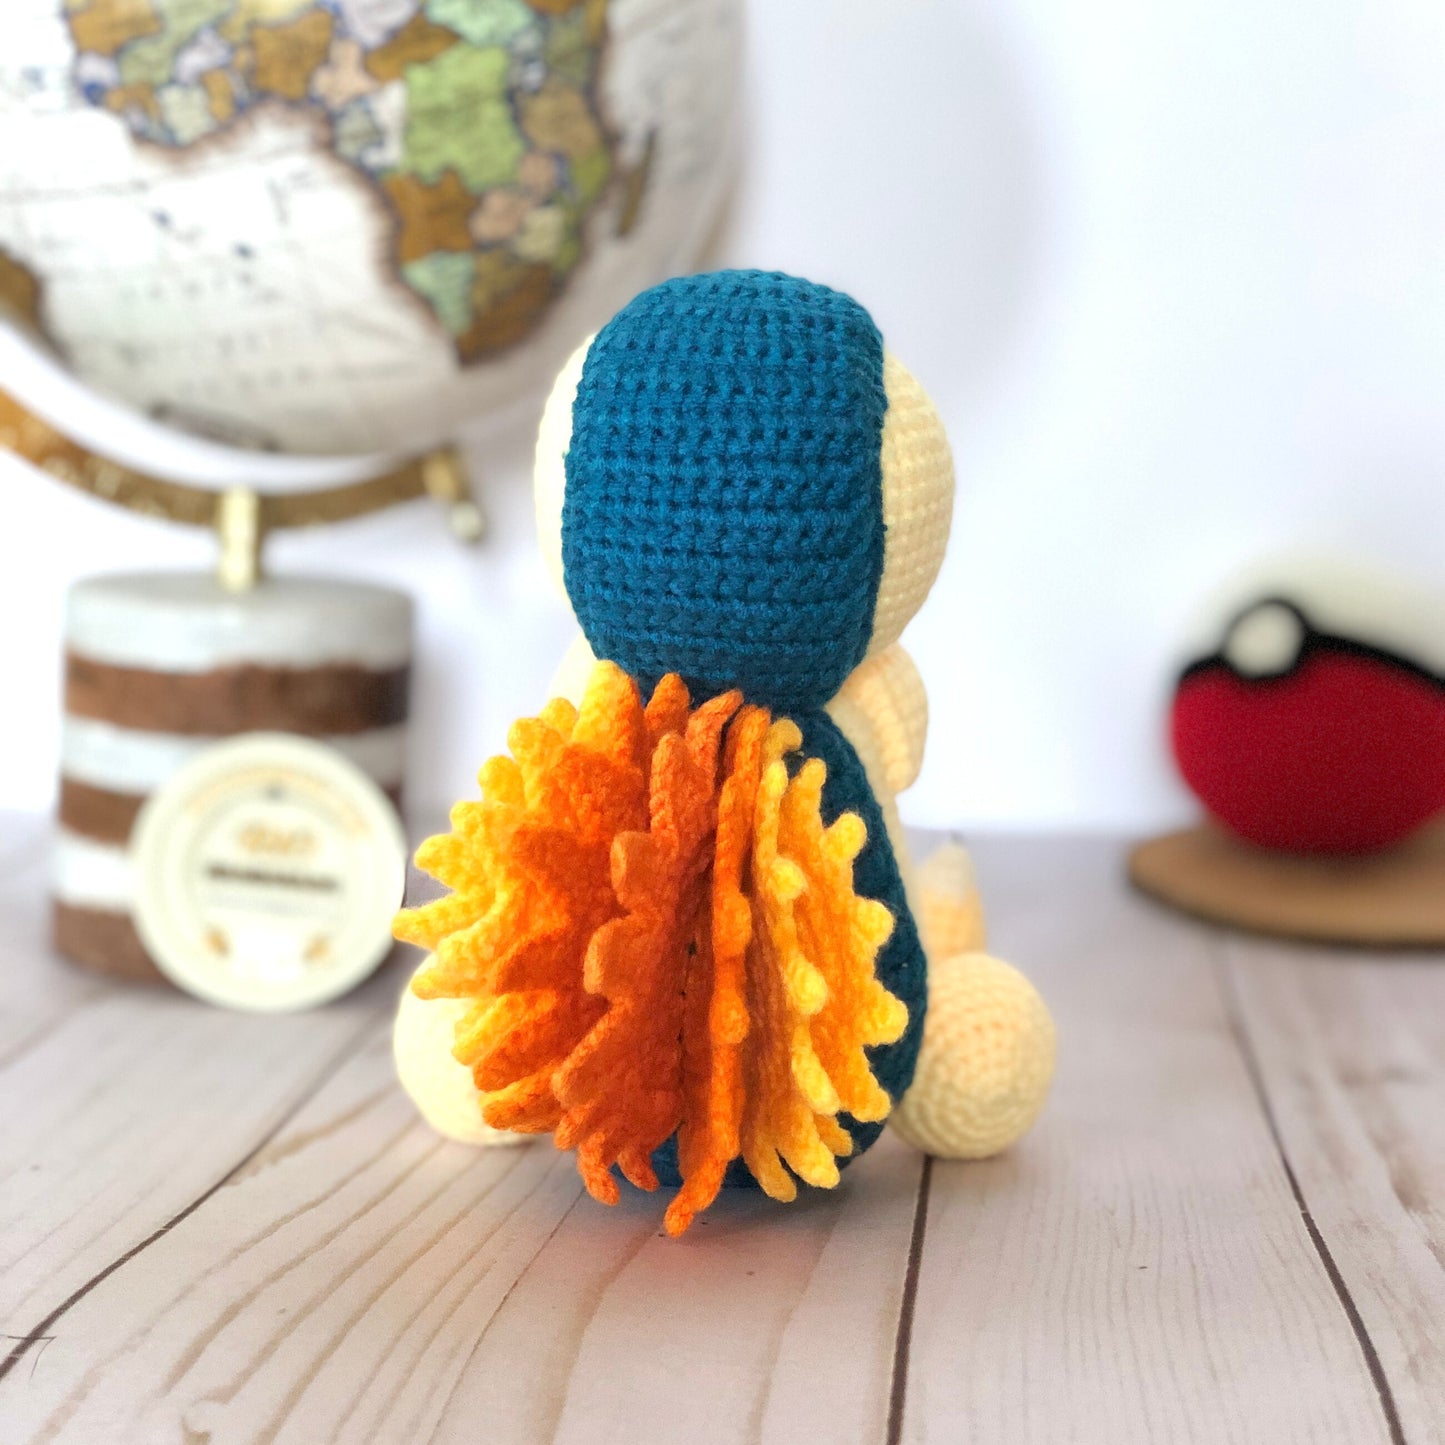 Handmade Yarn Cotton Cyndaquil Inspired, Crochet Cyndaquil, Inspired by Pokemon, Amigurumi Toy, cute, toddler, kid, adult hobby